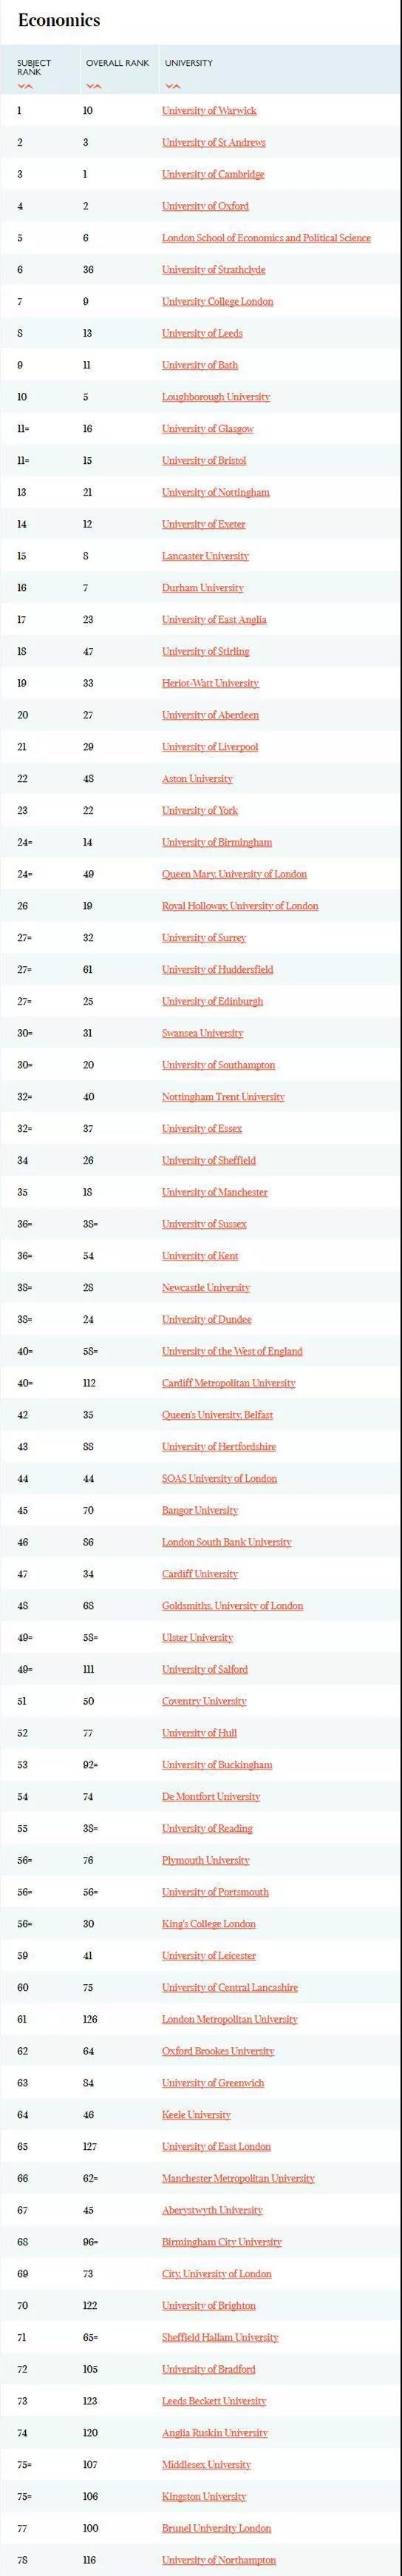 TIMES大学排名